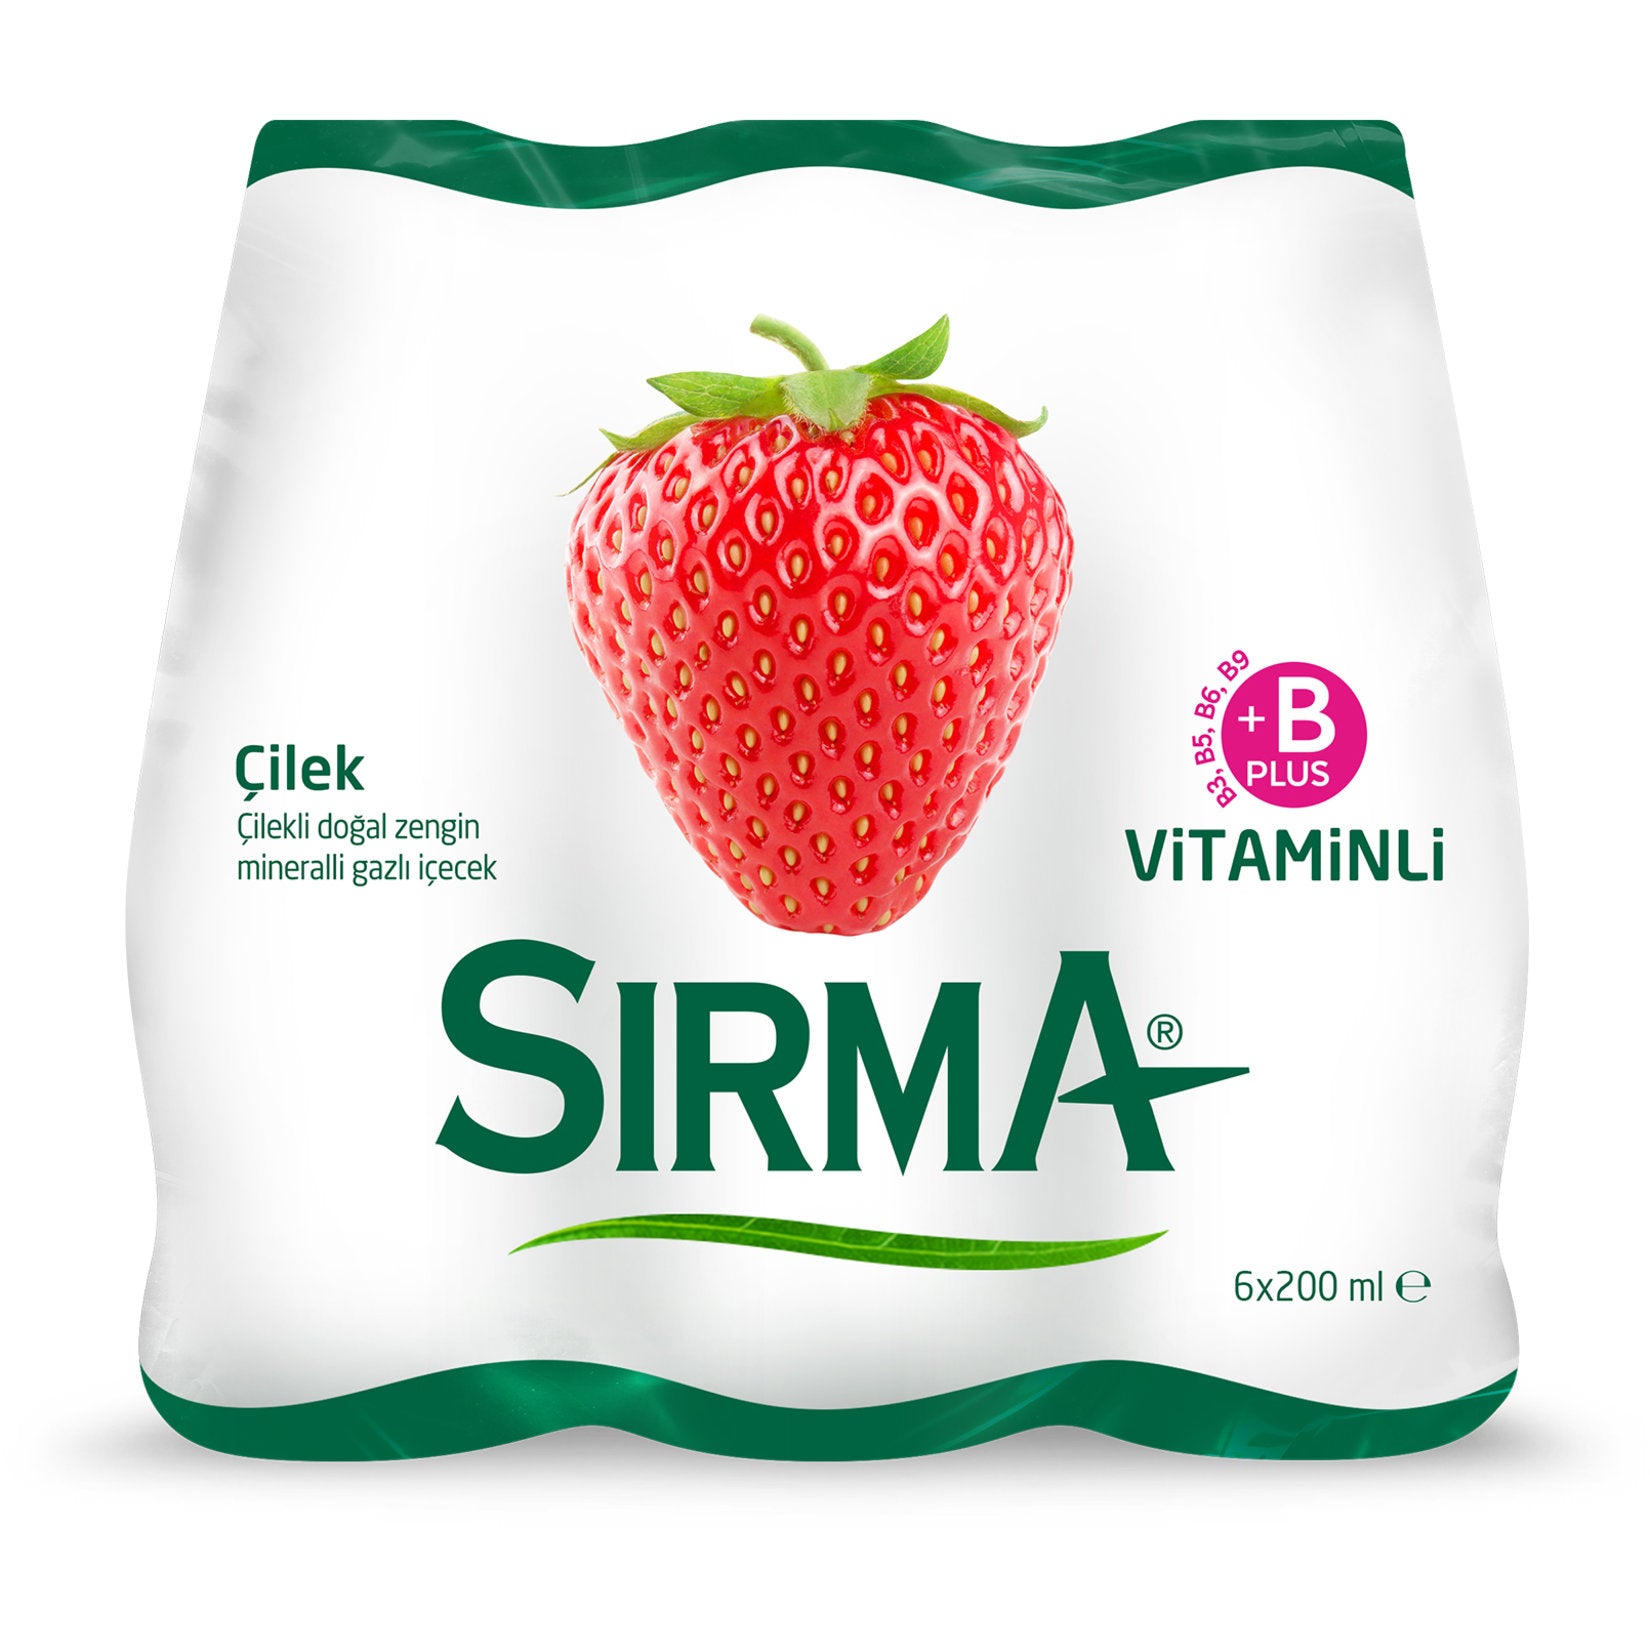 Sirma Soda Glass Bottle Strawberry 250ml